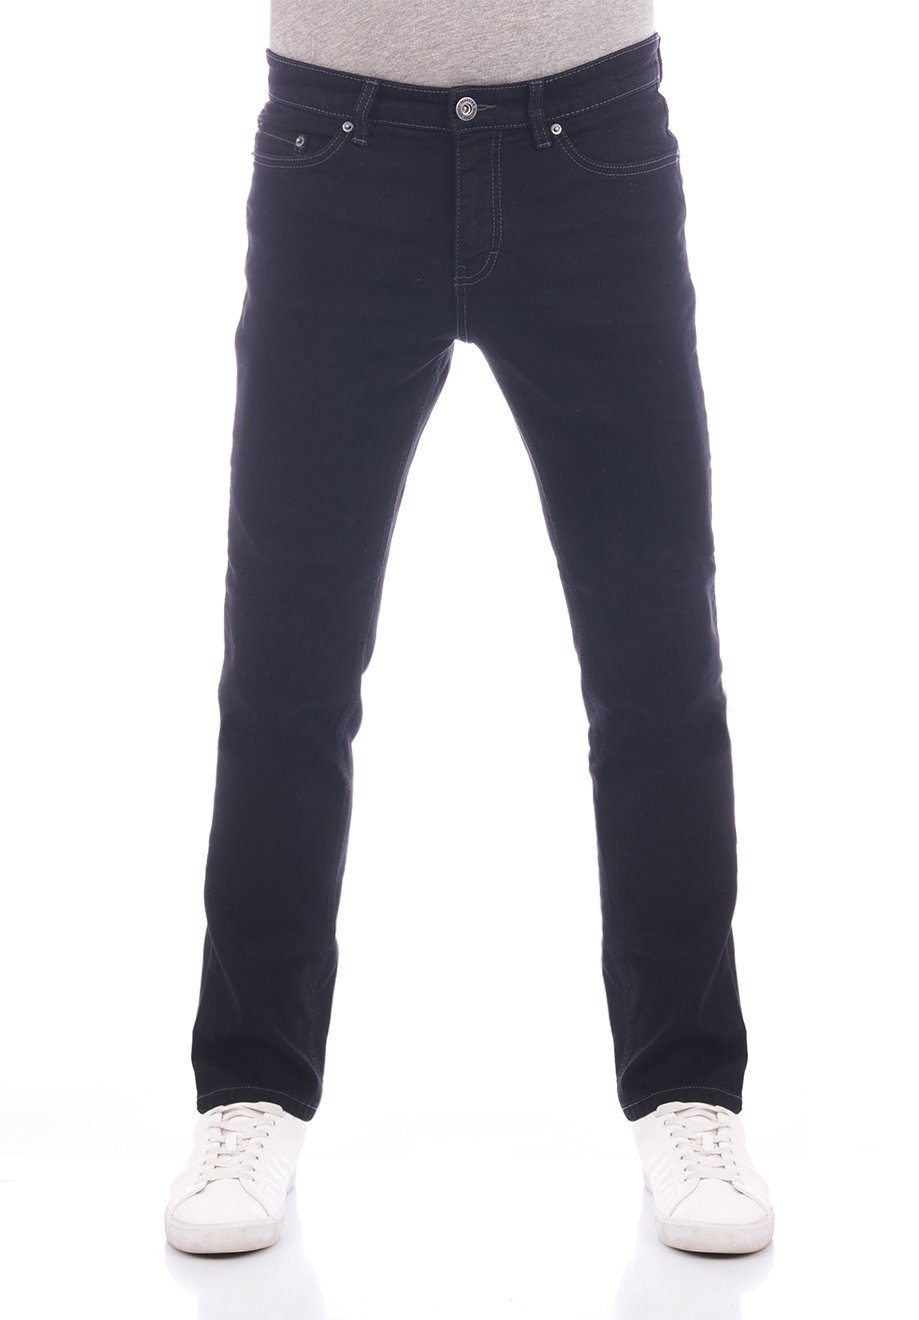 Paddock's Herren mit Stretch Pipe Slim-fit-Jeans (1219) Denim Jeanshose Hose Slim Ranger Black Fit Night